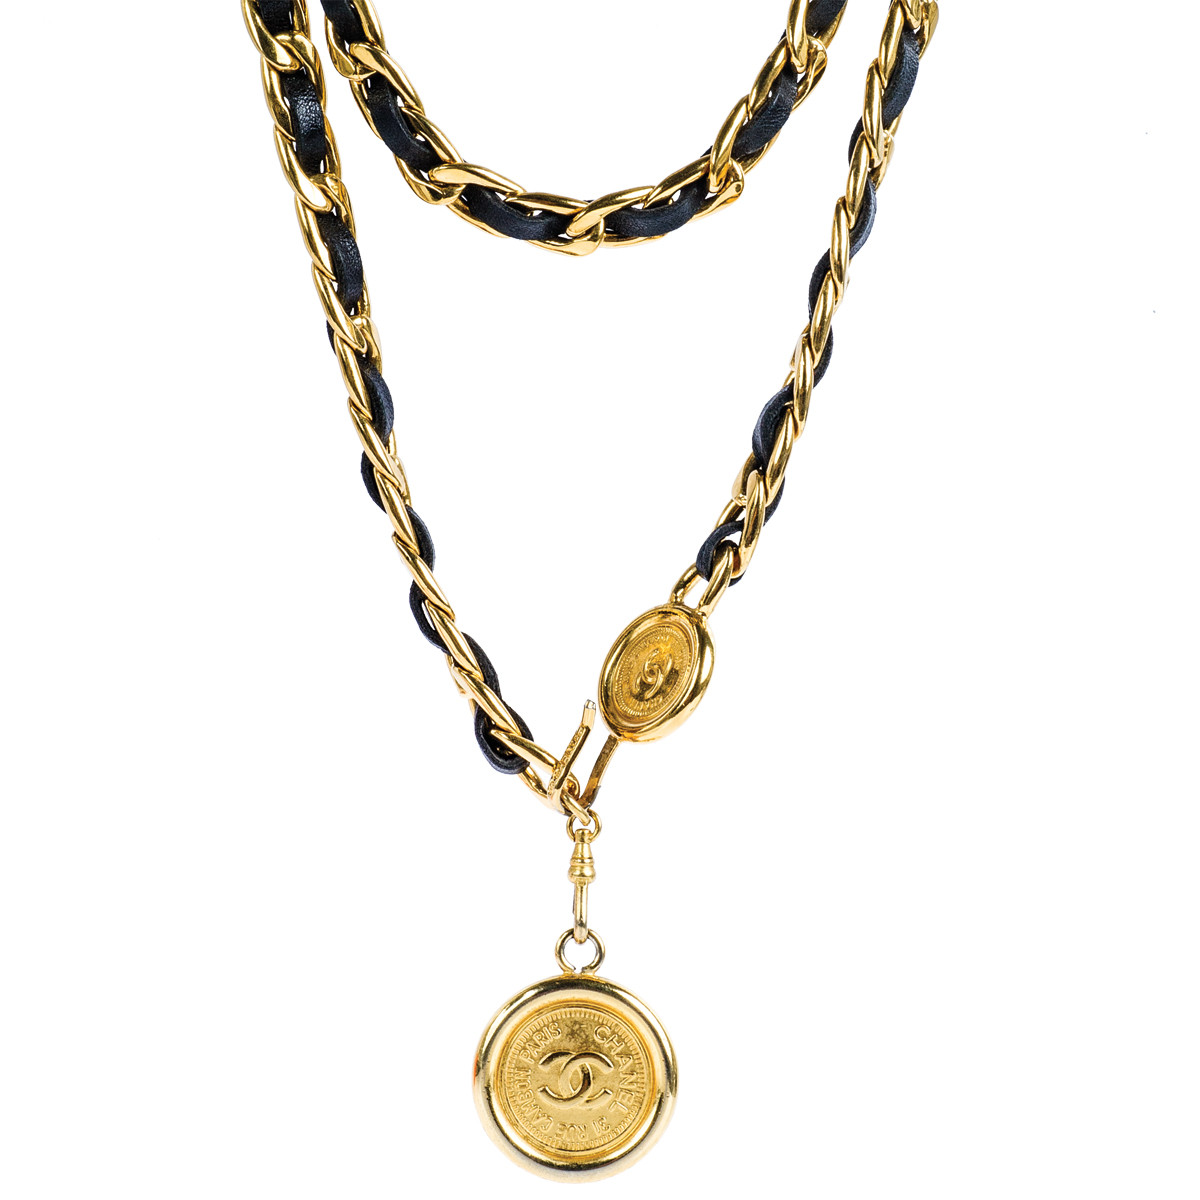 Vintage Chanel Leather Chain Belt/Necklace